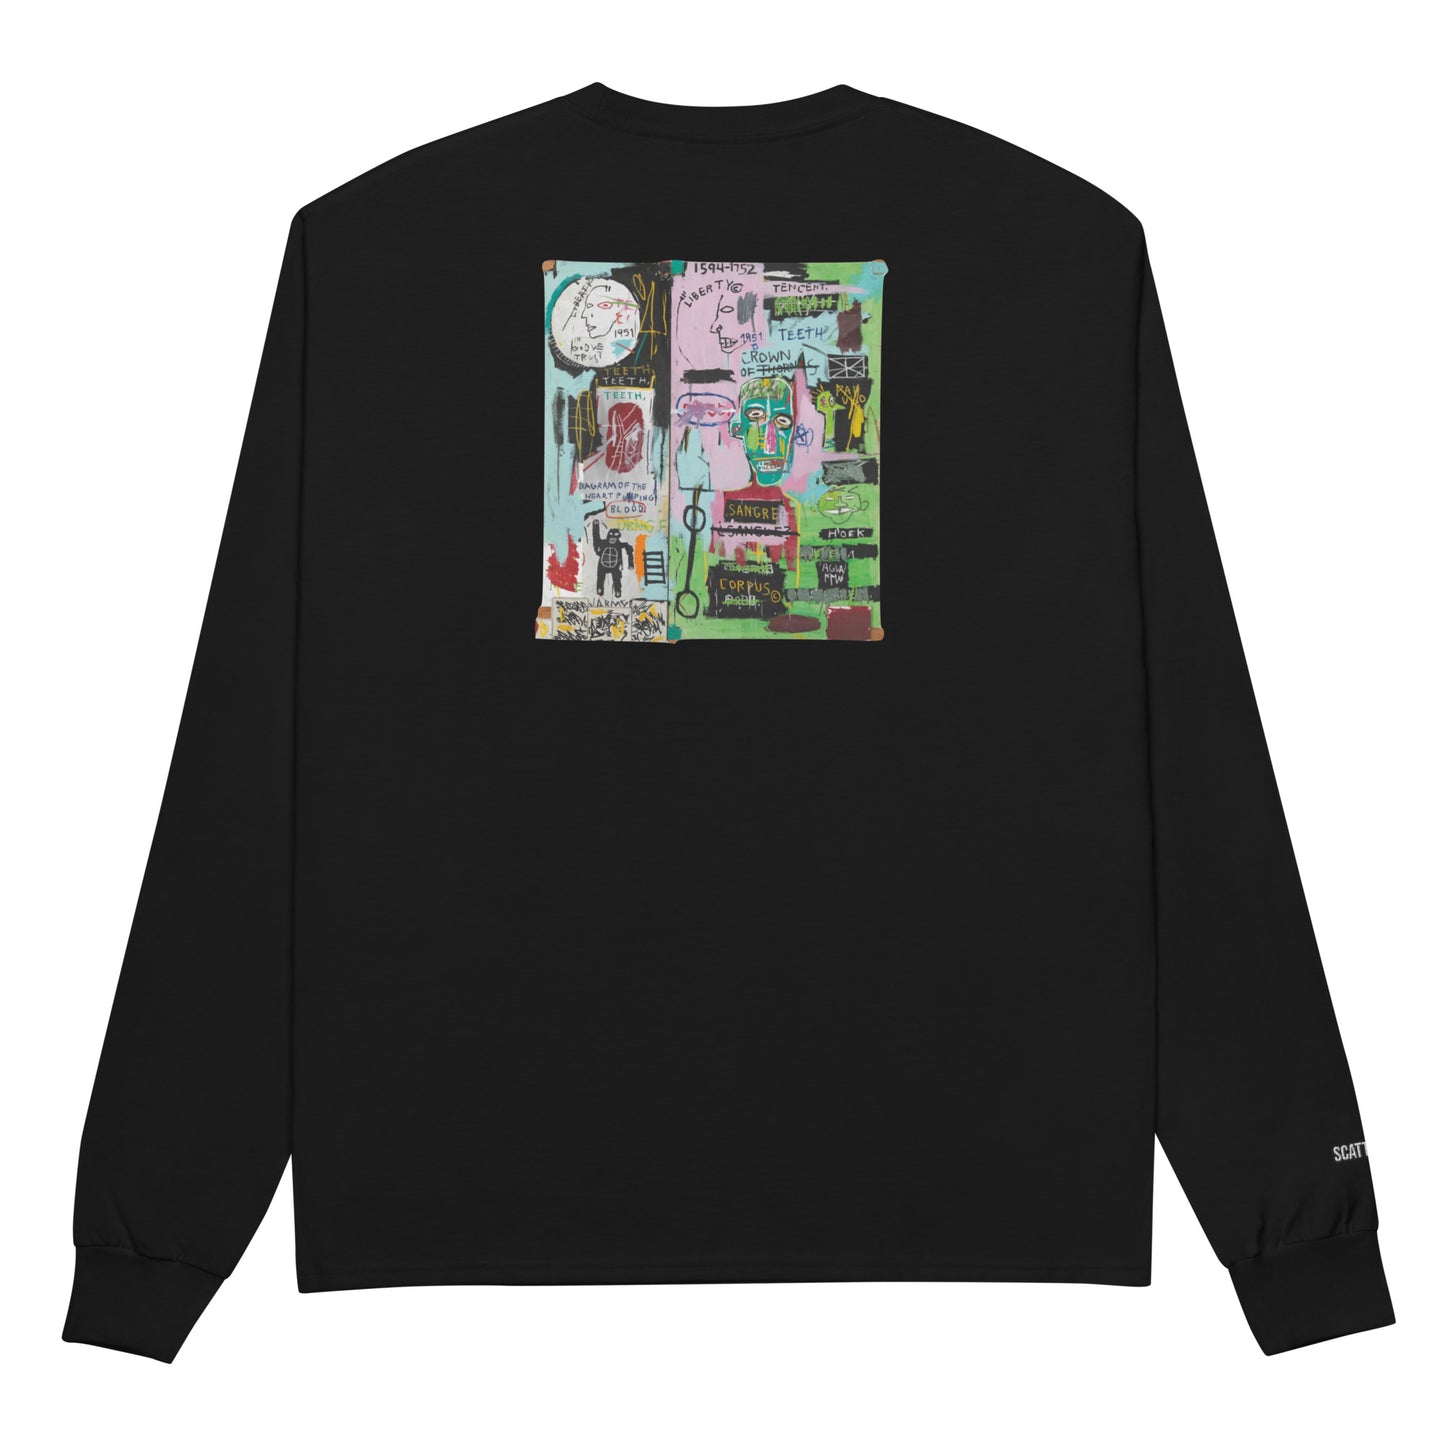 Jean-Michel Basquiat "In Italian" Artwork Printed Premium Black Champion Crewneck Long Sleeve Shirt Scattered Streetwear